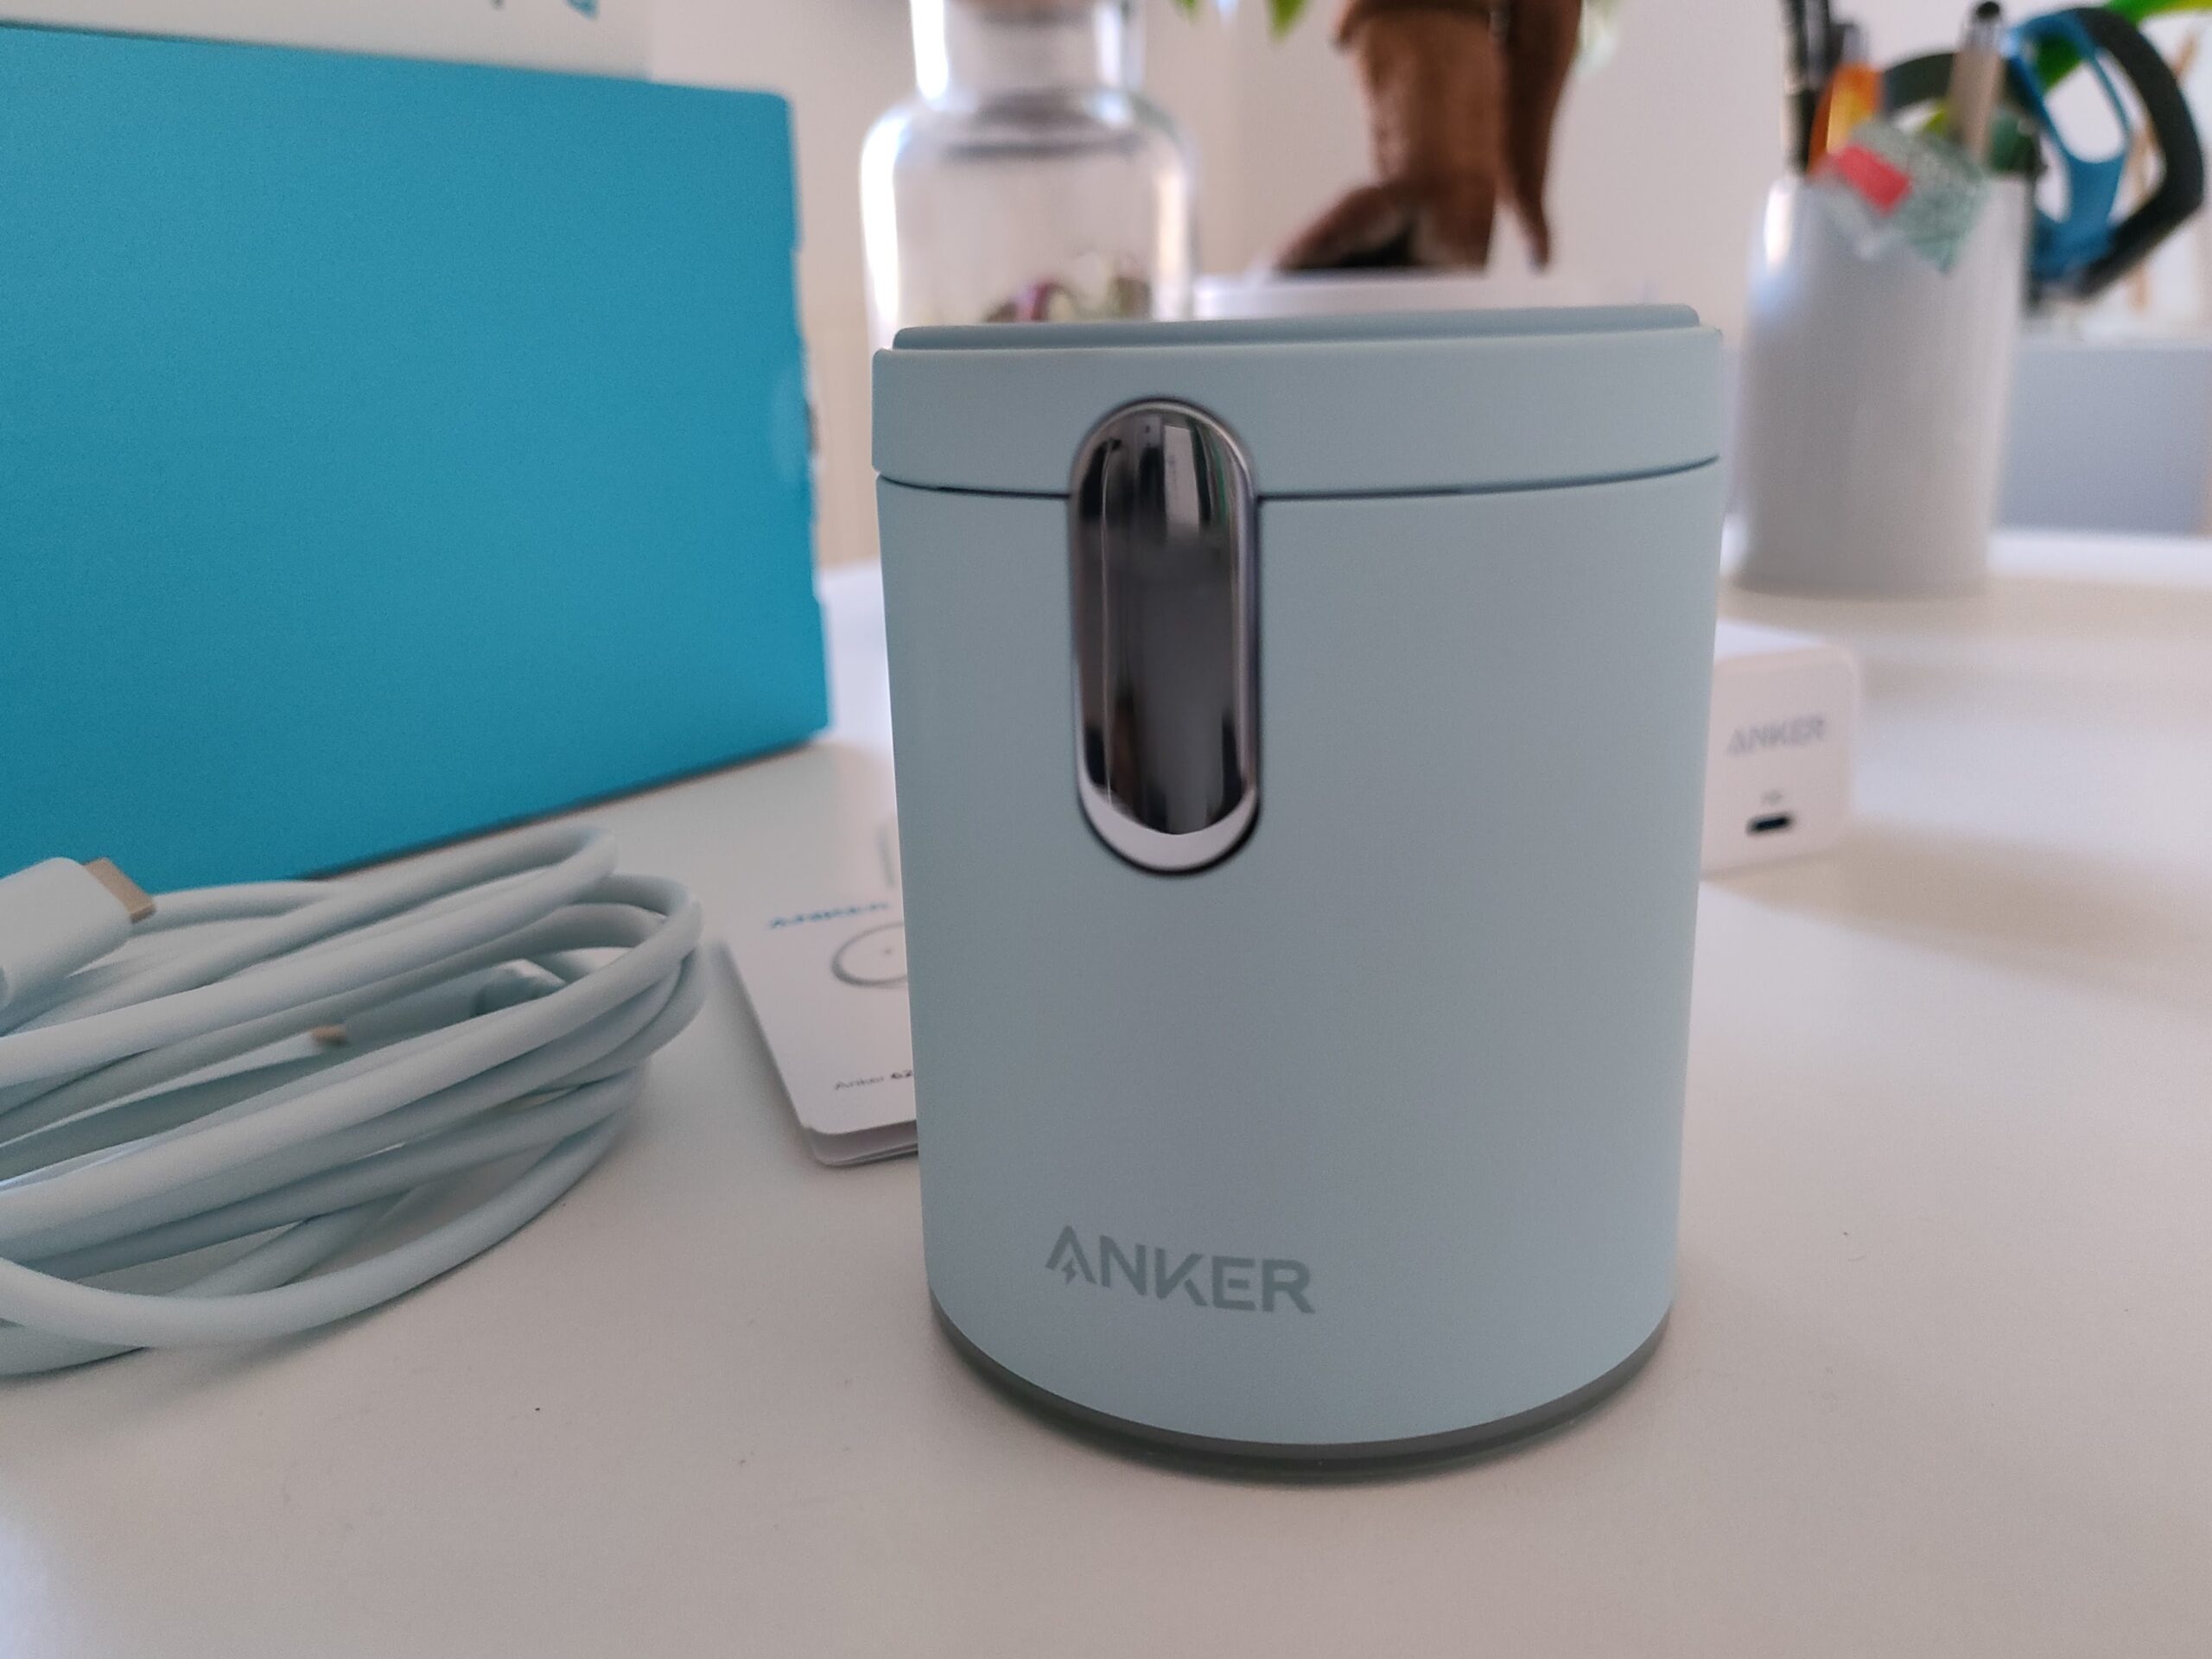 Recensione Anker 623 MagGo, la stazione di ricarica magnetica per iPhone in lattina